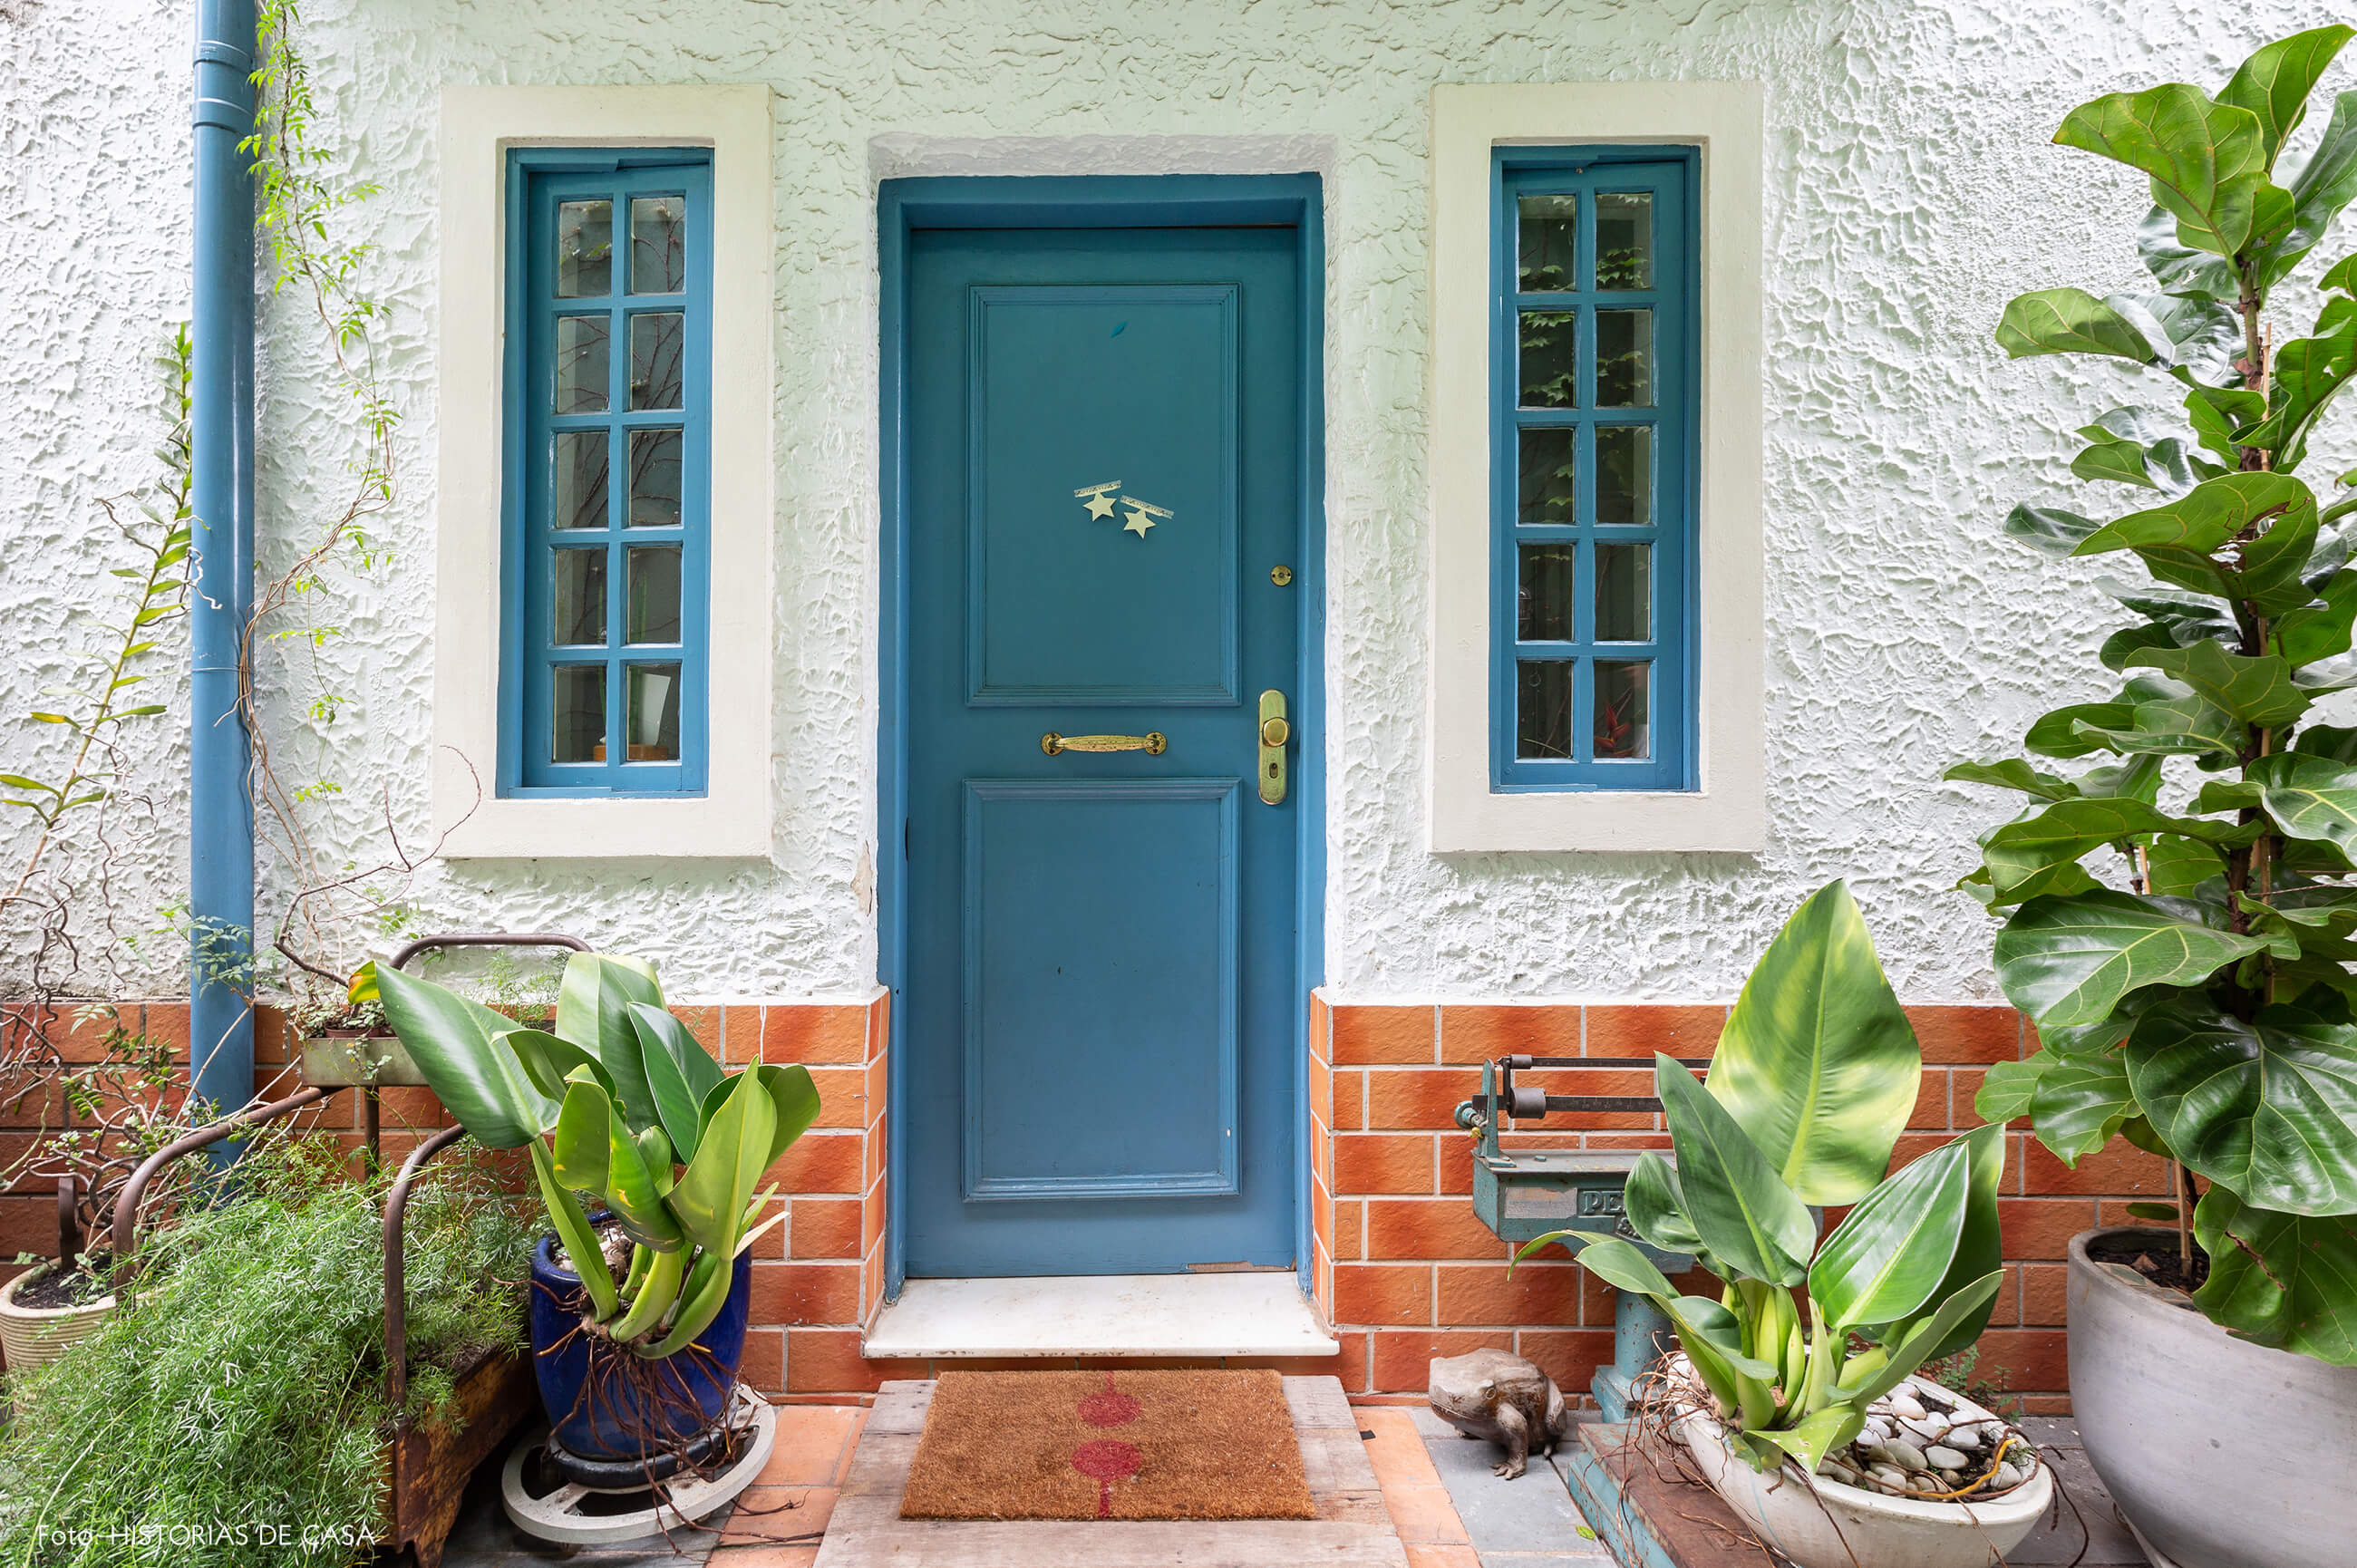 Casa com fachada charmosa e portas pintadas de azul